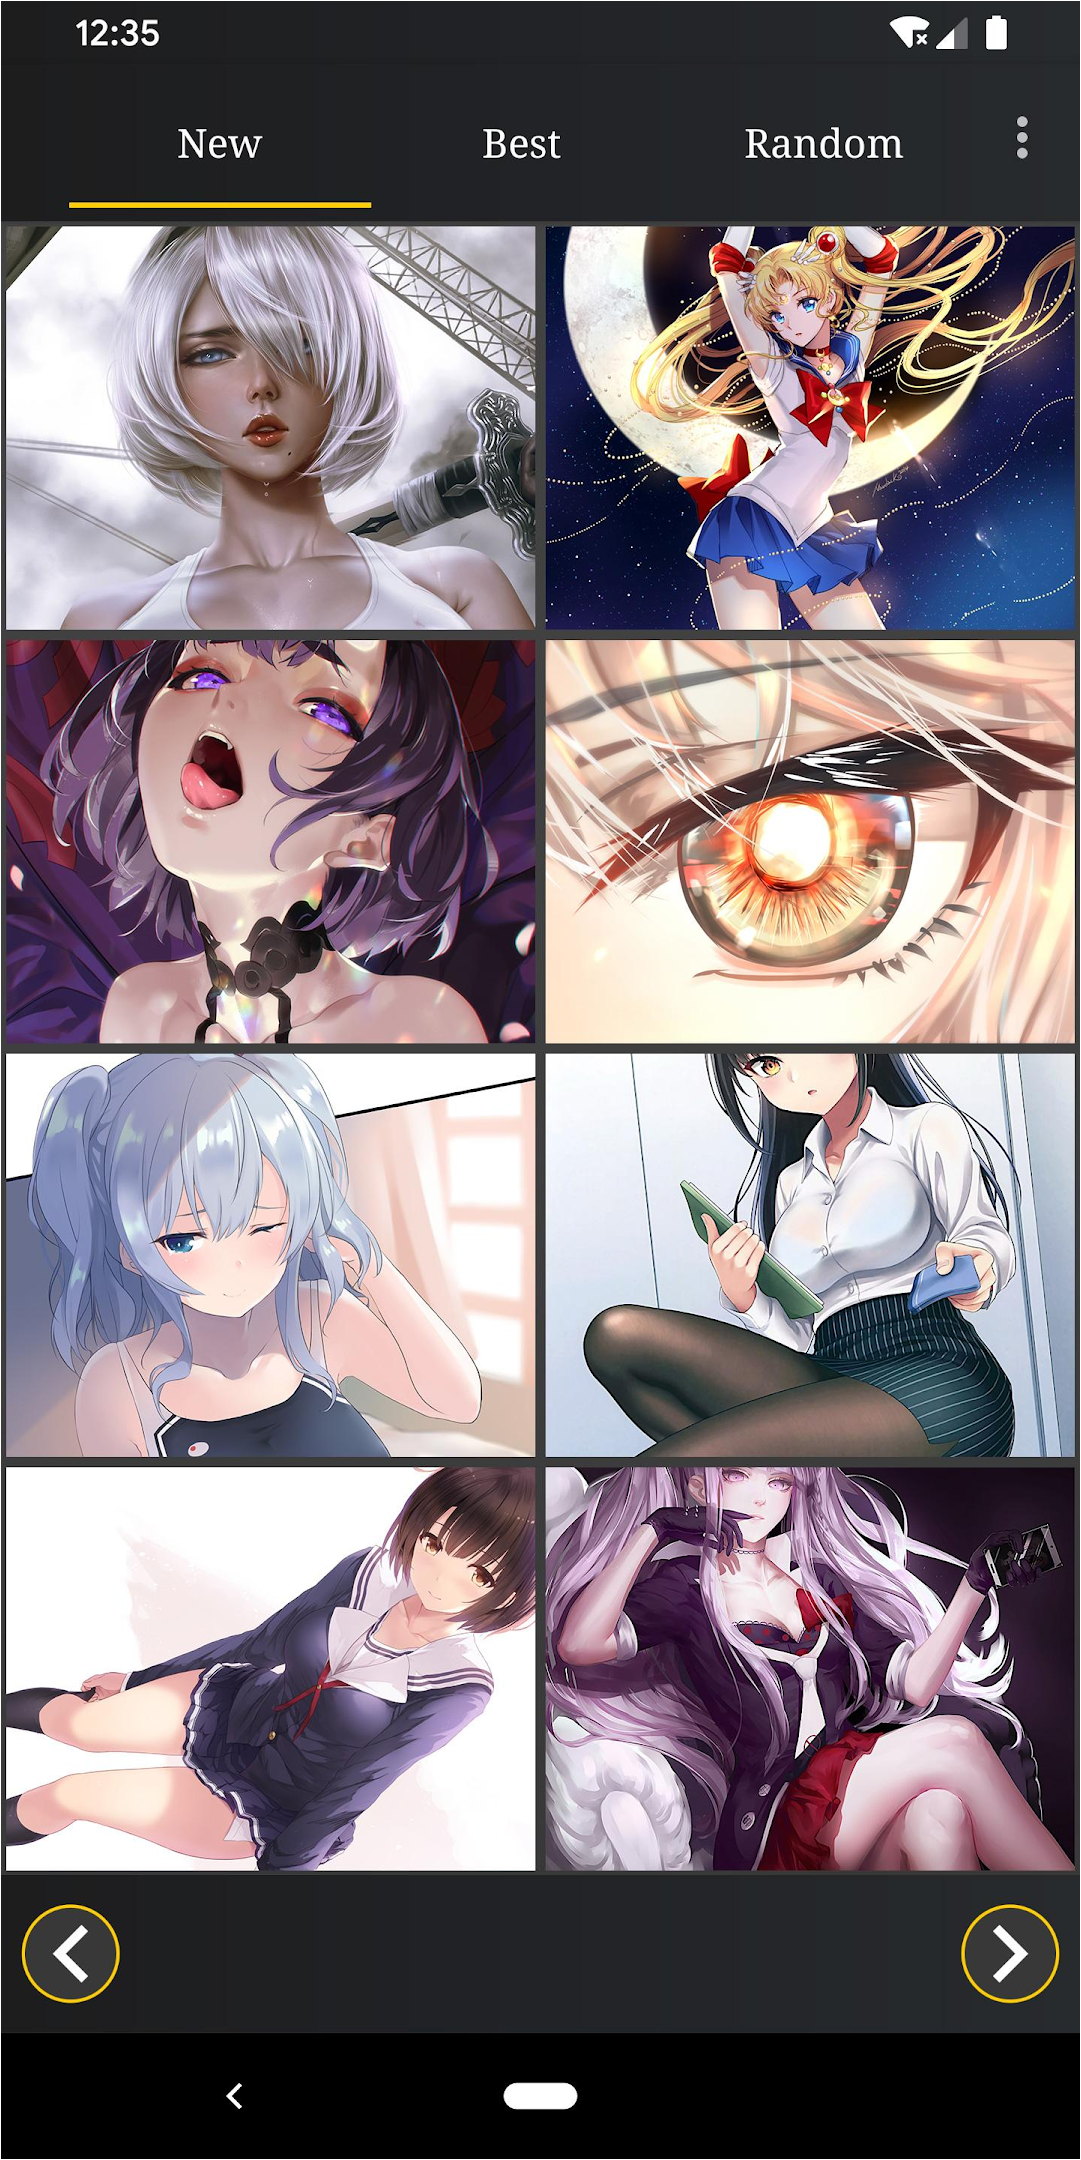 Hentai Anime Girl Wallpaper,HD Anime Wallpapers,4k Wallpapers